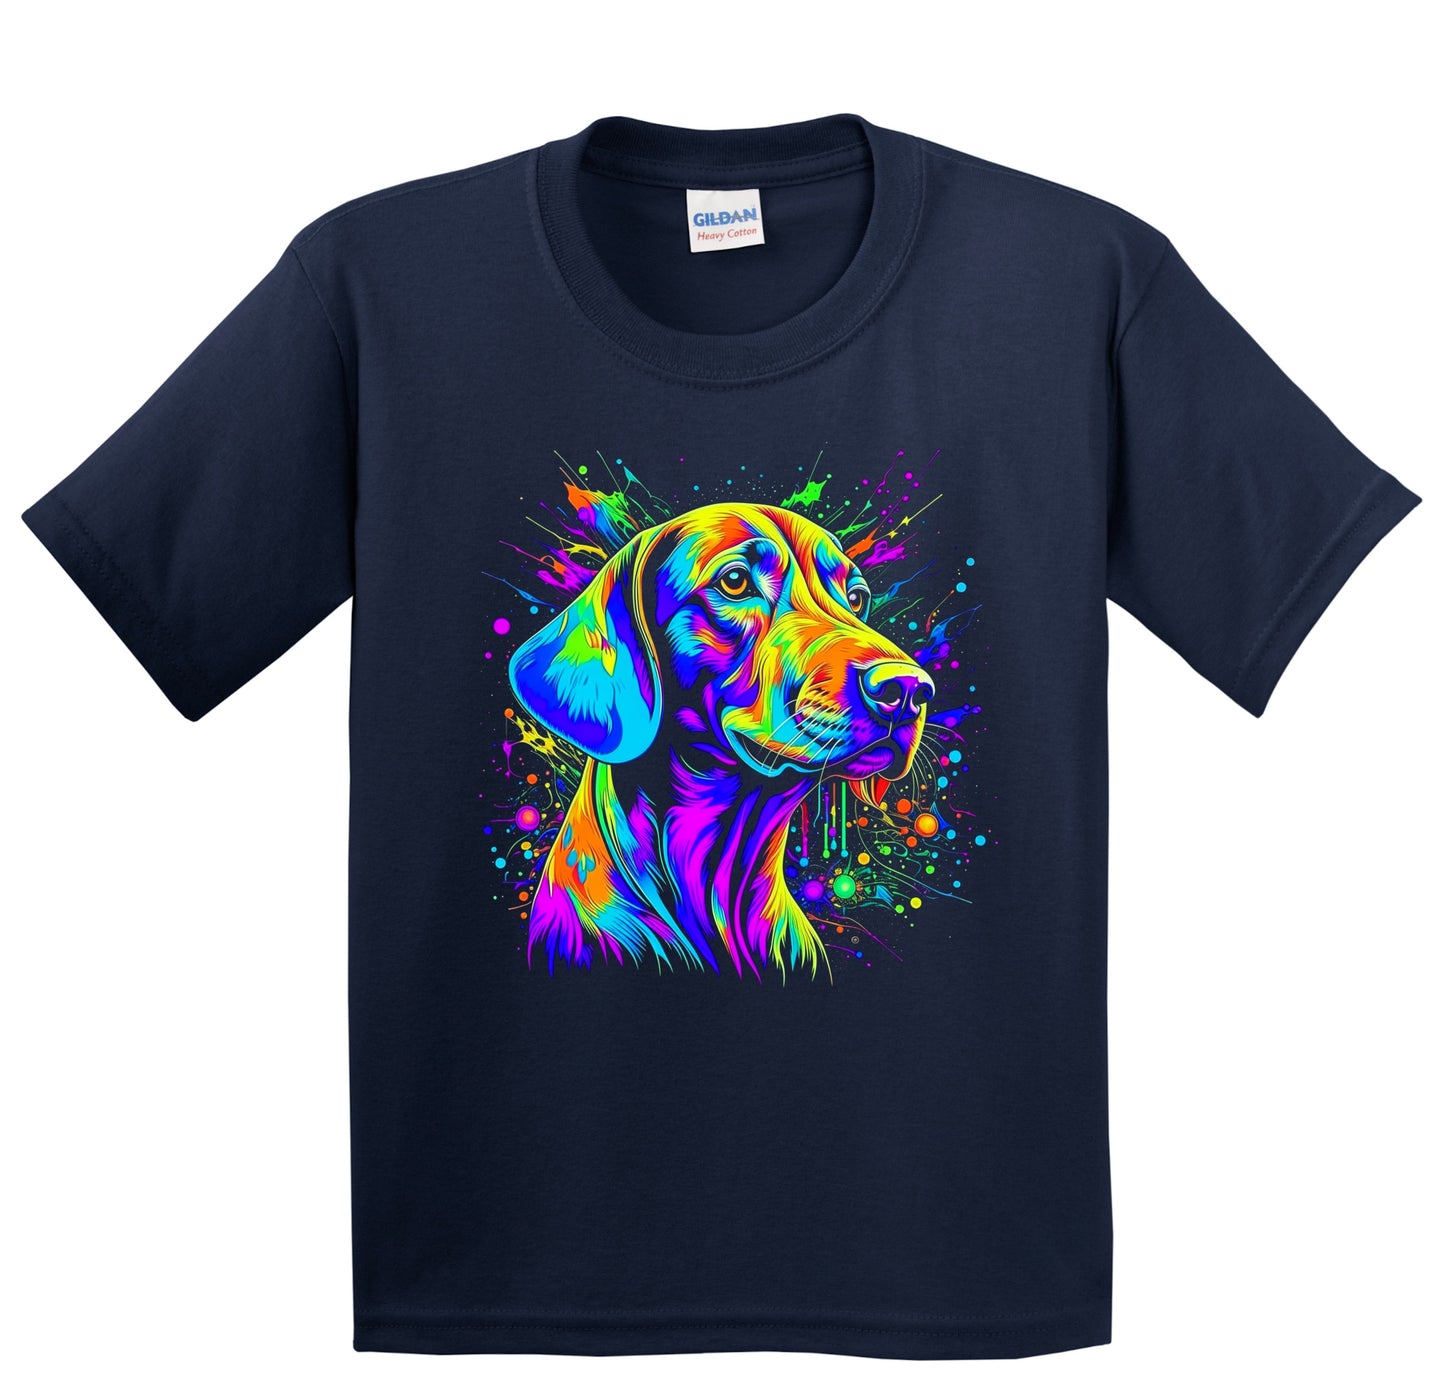 Colorful Bright Vizsla Vibrant Psychedelic Dog Art Youth T-Shirt